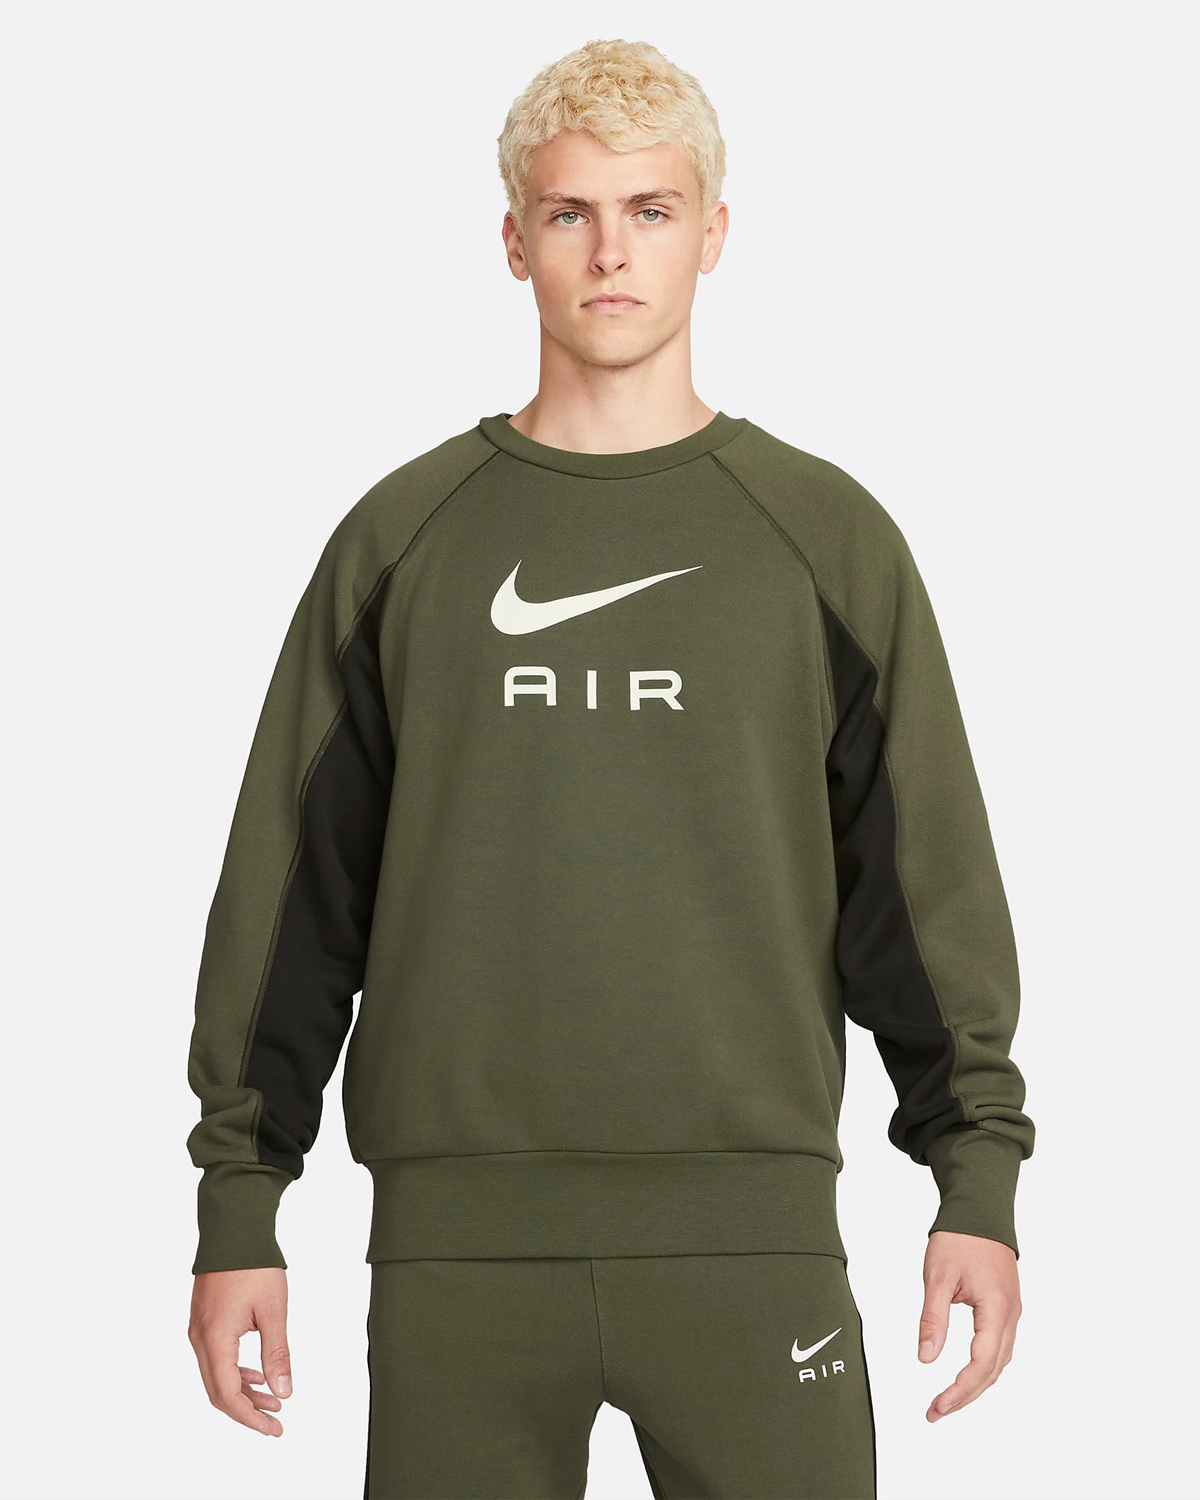 Nike-Air-Crew-Sweatshirt-Olive-Green